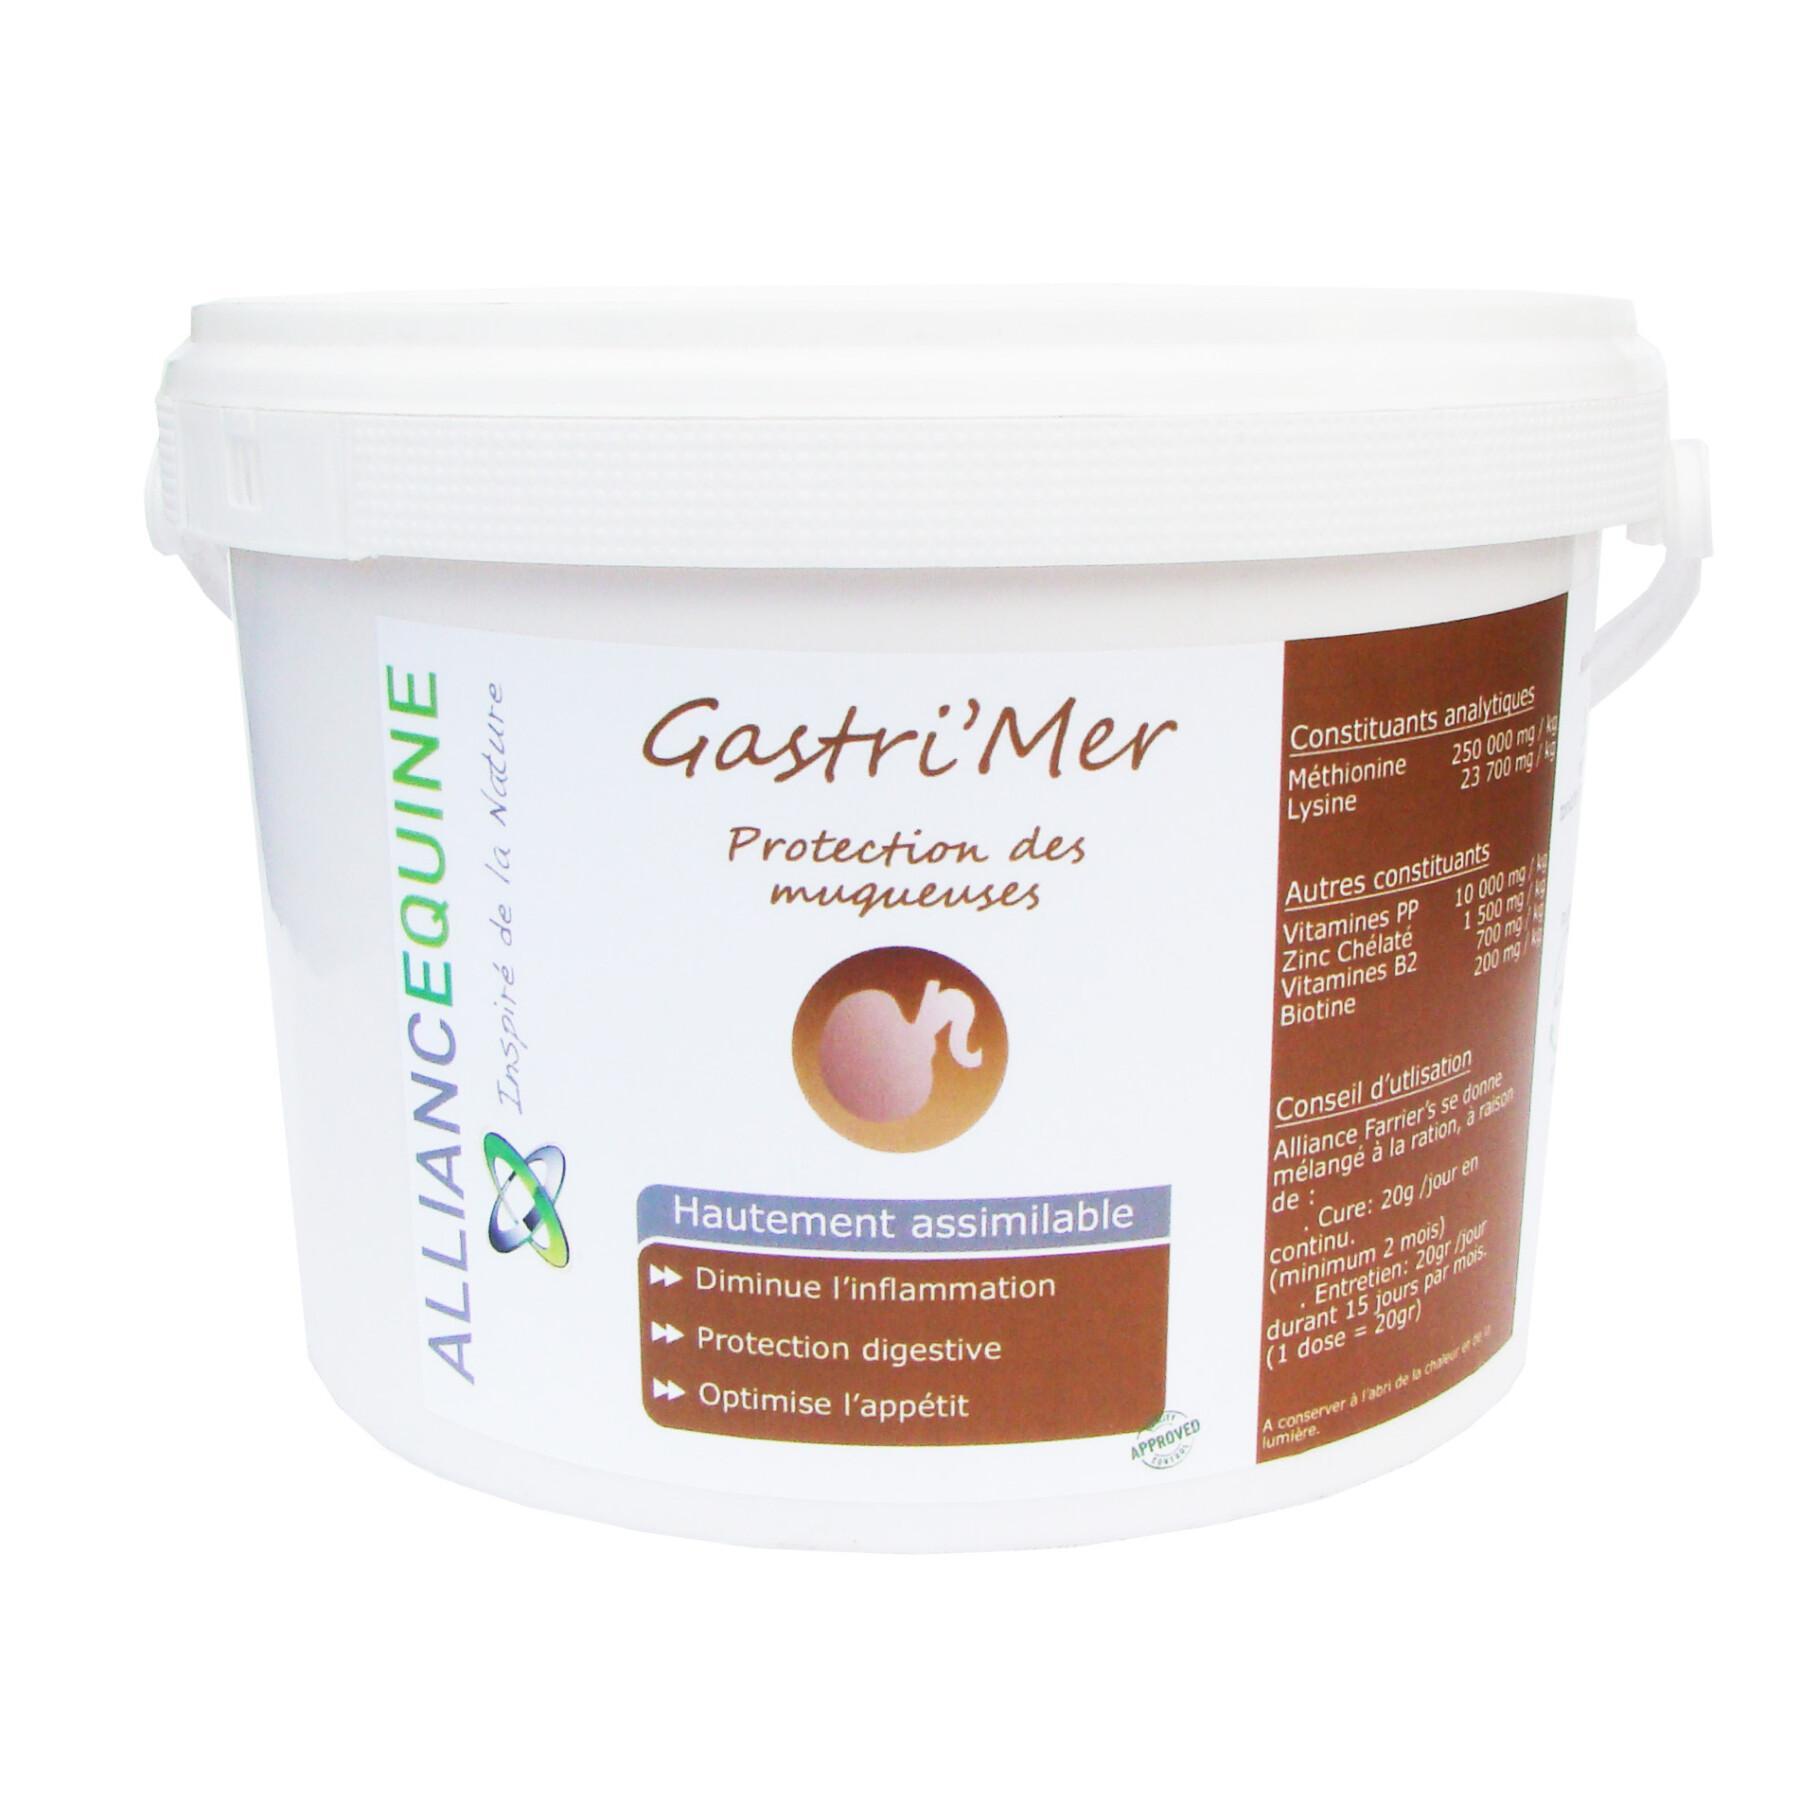 Gastric comfort food supplement Alliance Equine Gastri'Mer